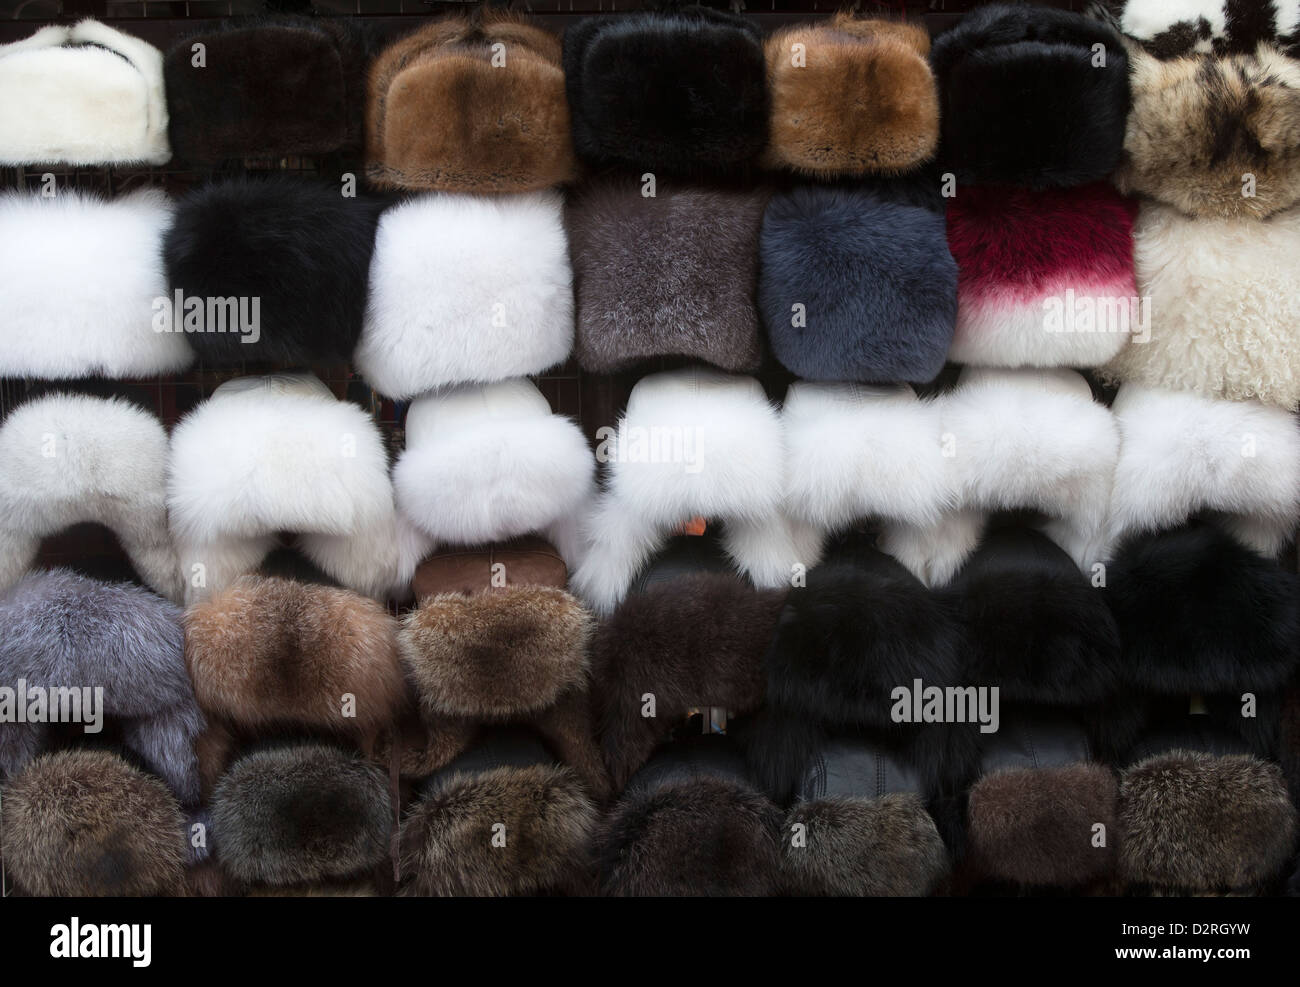 Fur hats in a street market Stock Photo